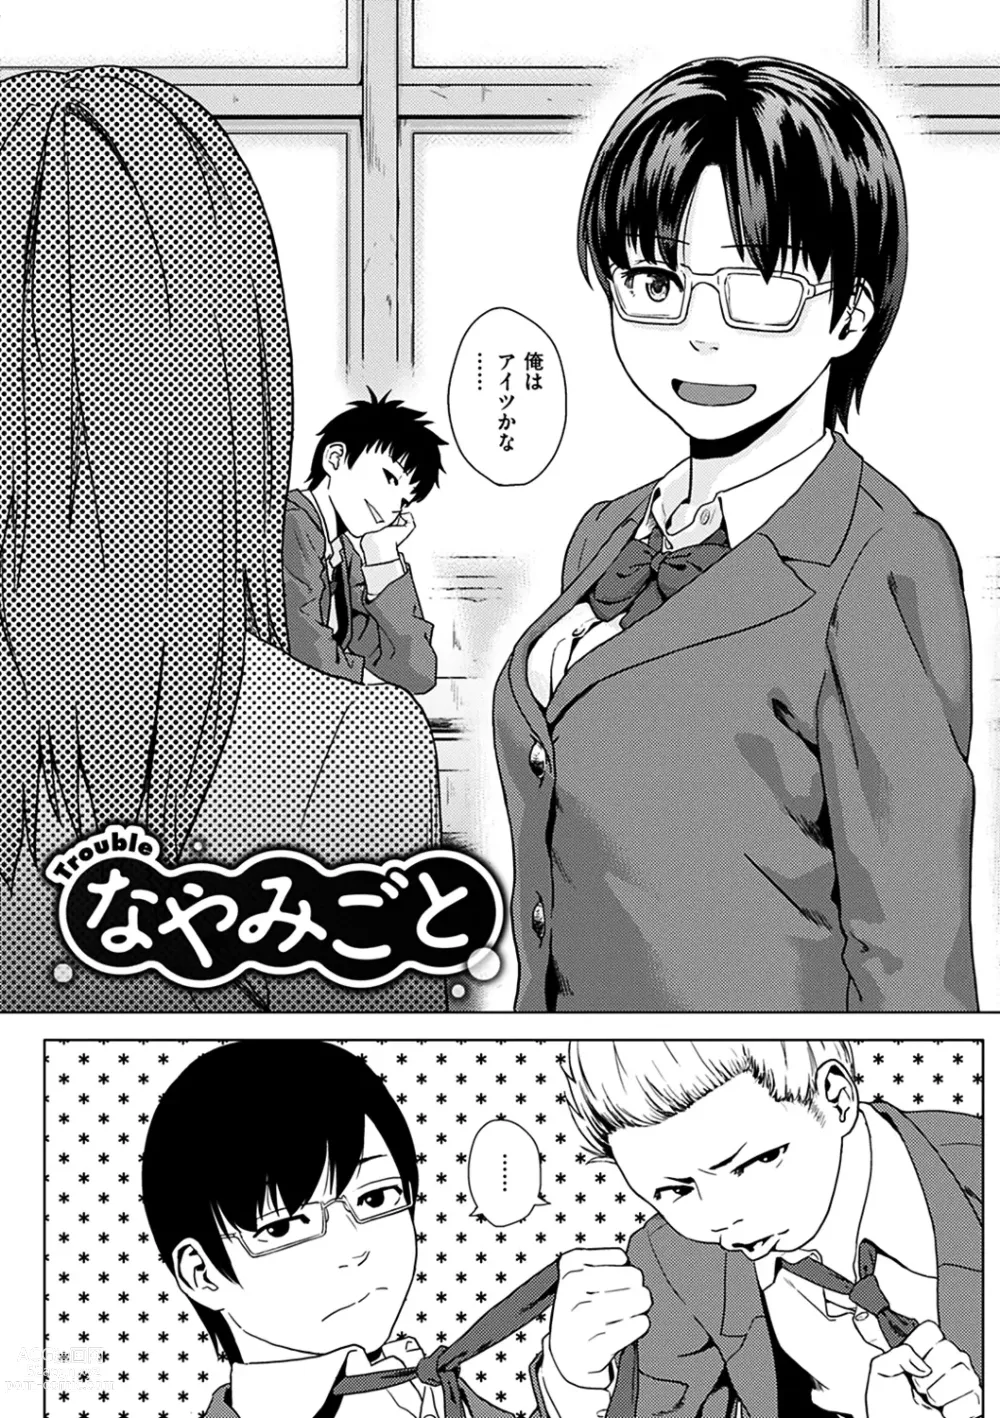 Page 6 of manga Kimi dake ni - I Only Love You...